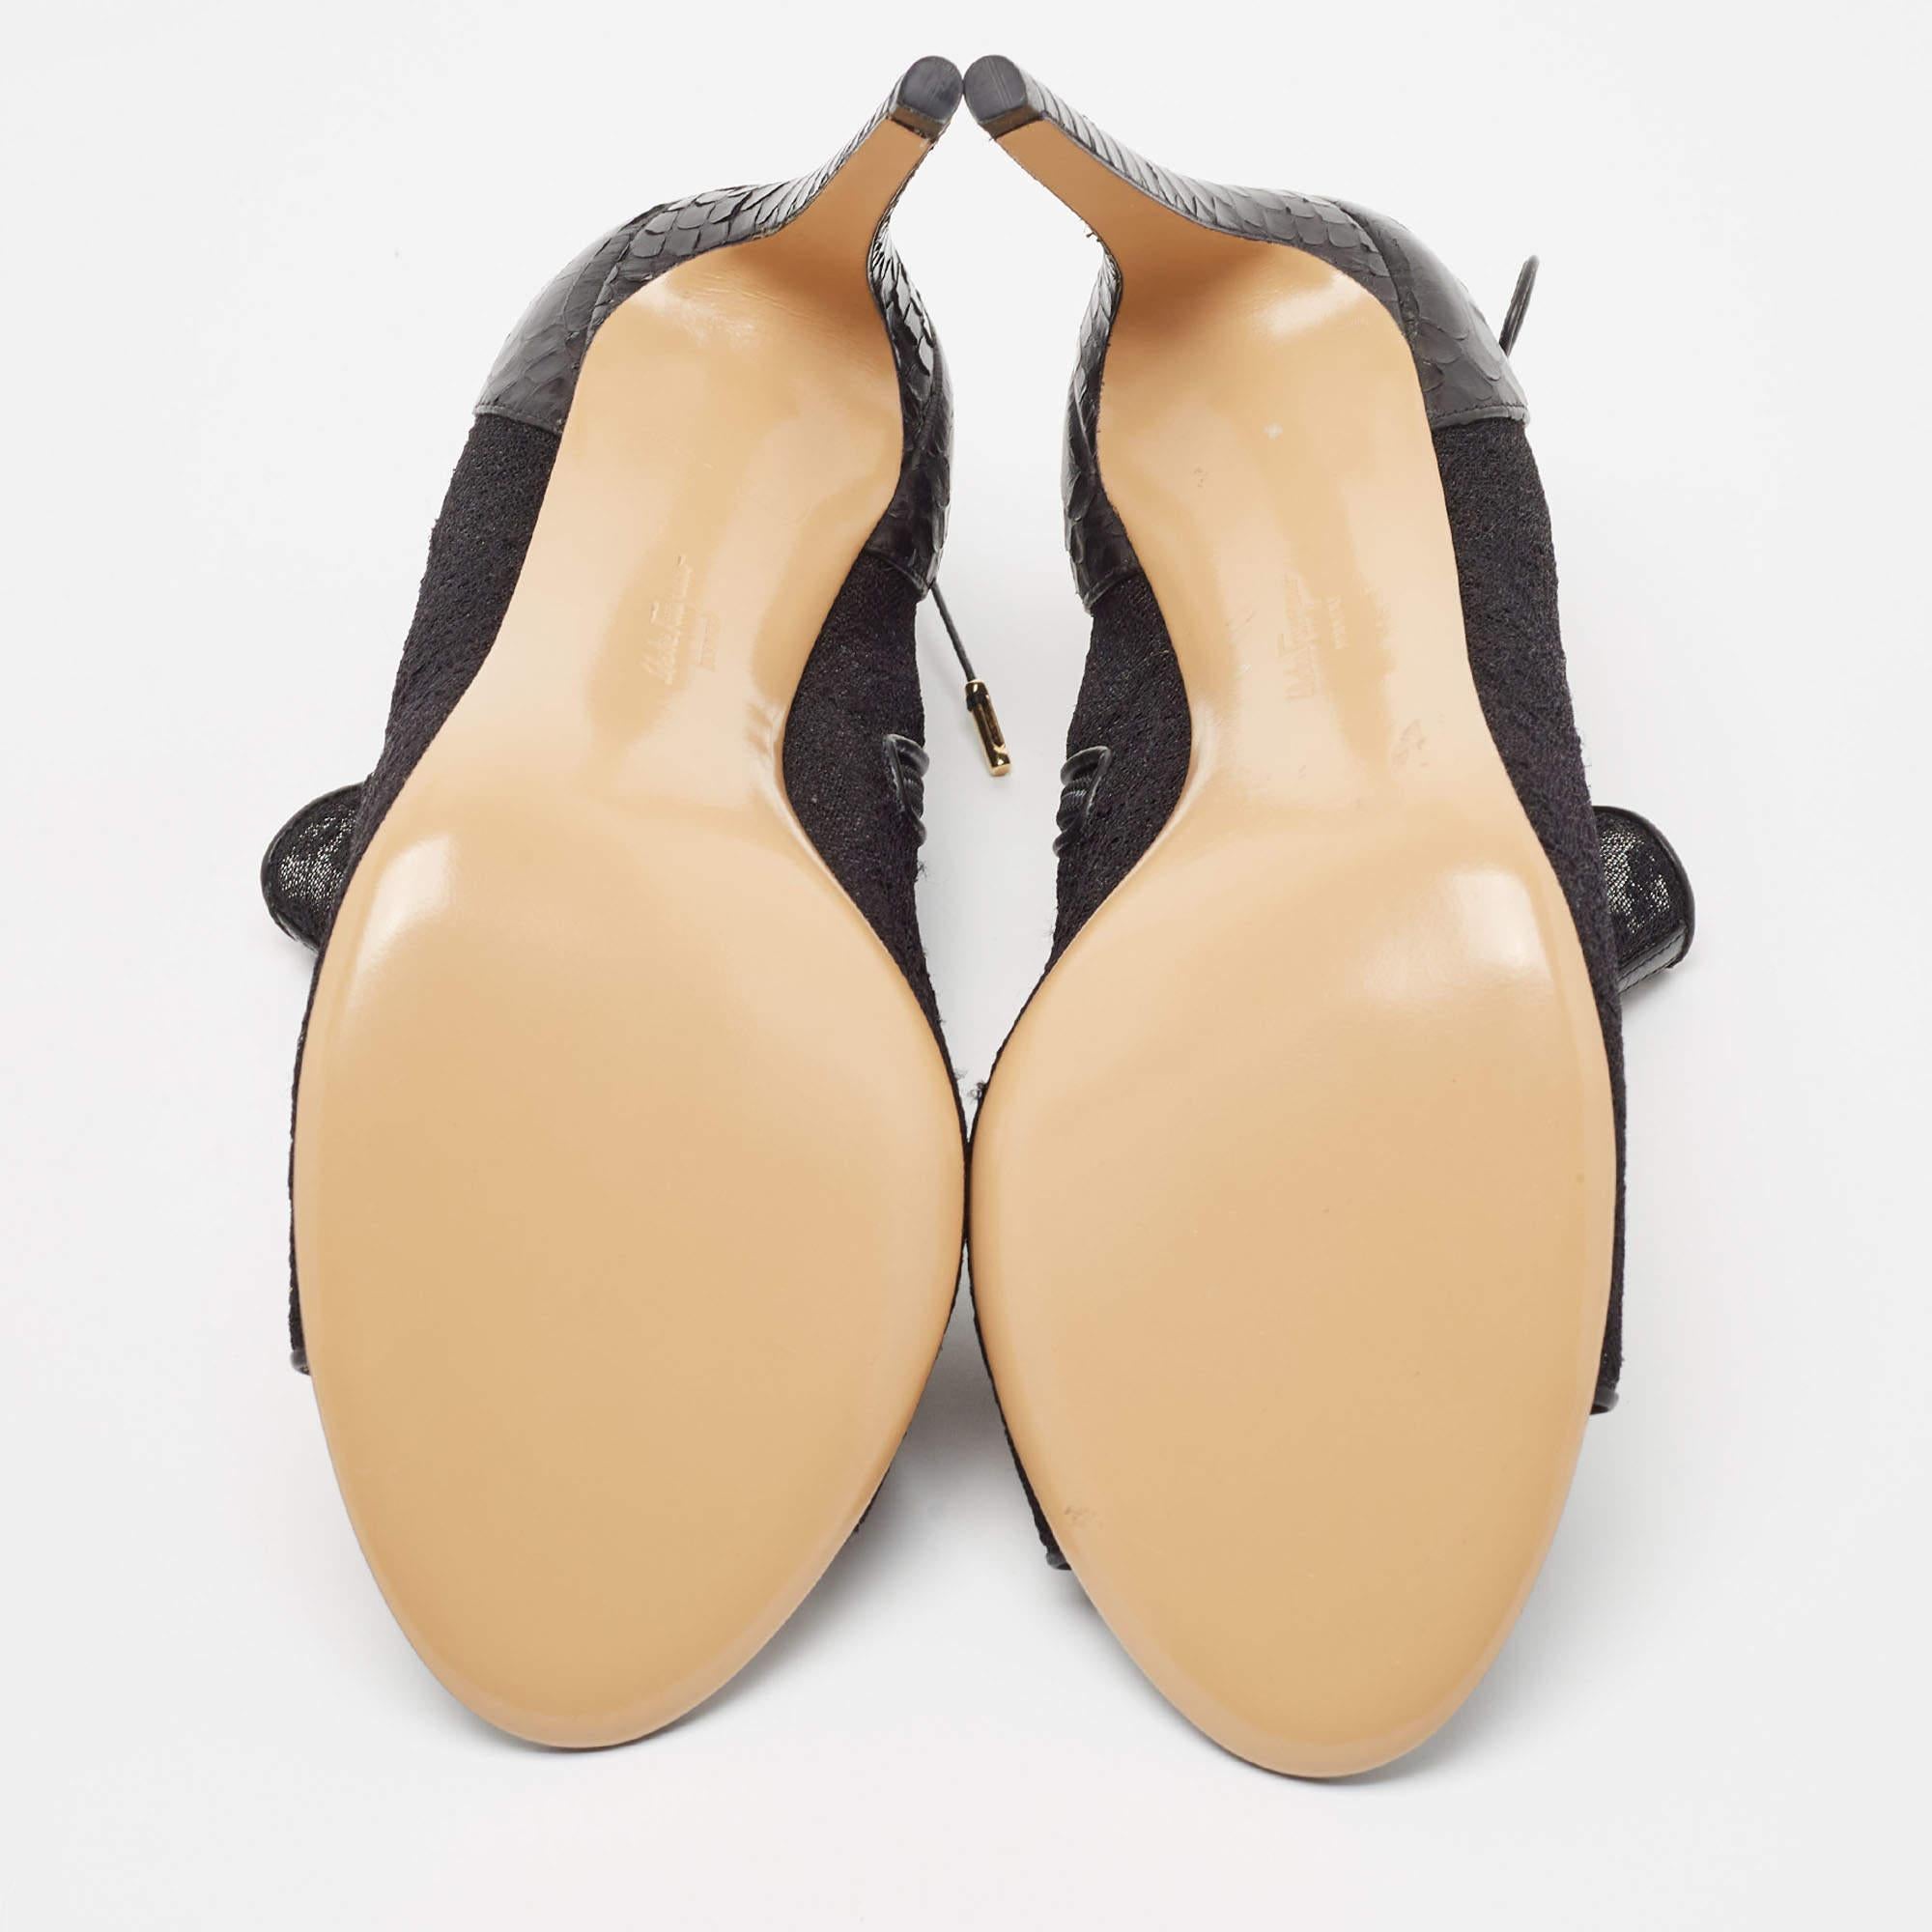 Salvatore Ferragamo Black Lace and Python Peep Toe Ankle Boots Size 39.5 2